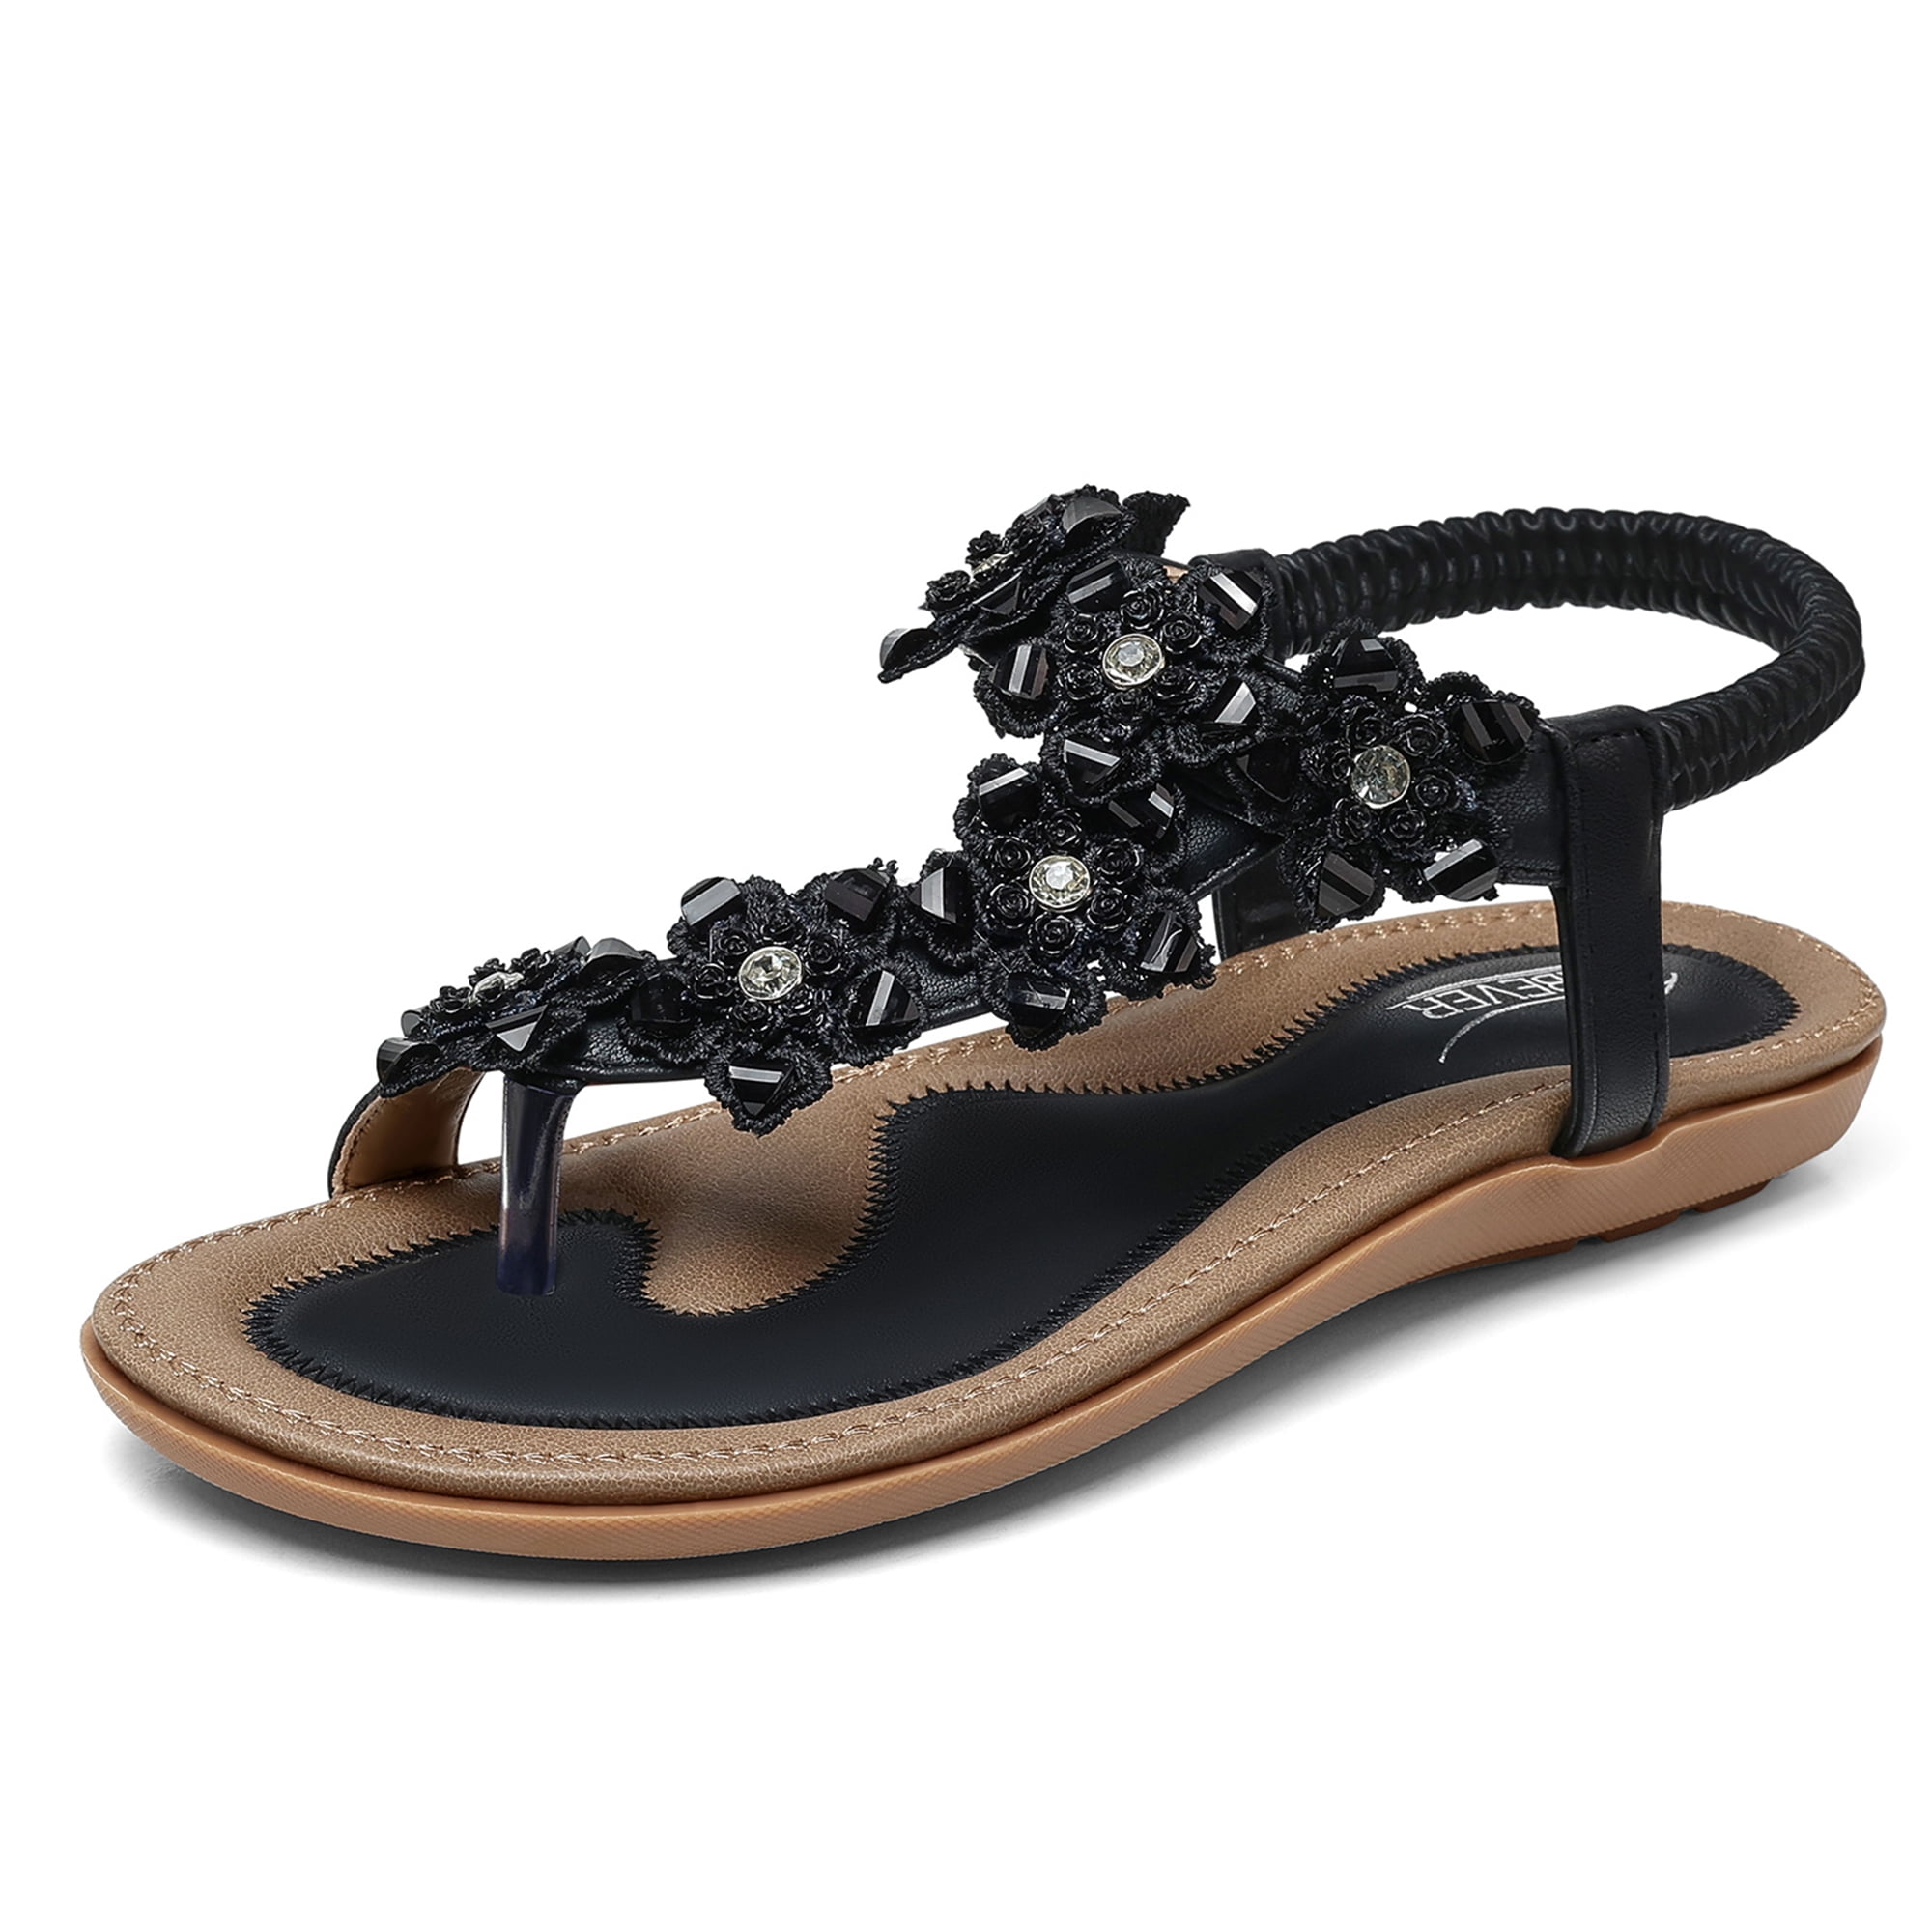 SHIBEVER Flats Sandals for Women Summer Bohemian Elastic Ankle Strap ...